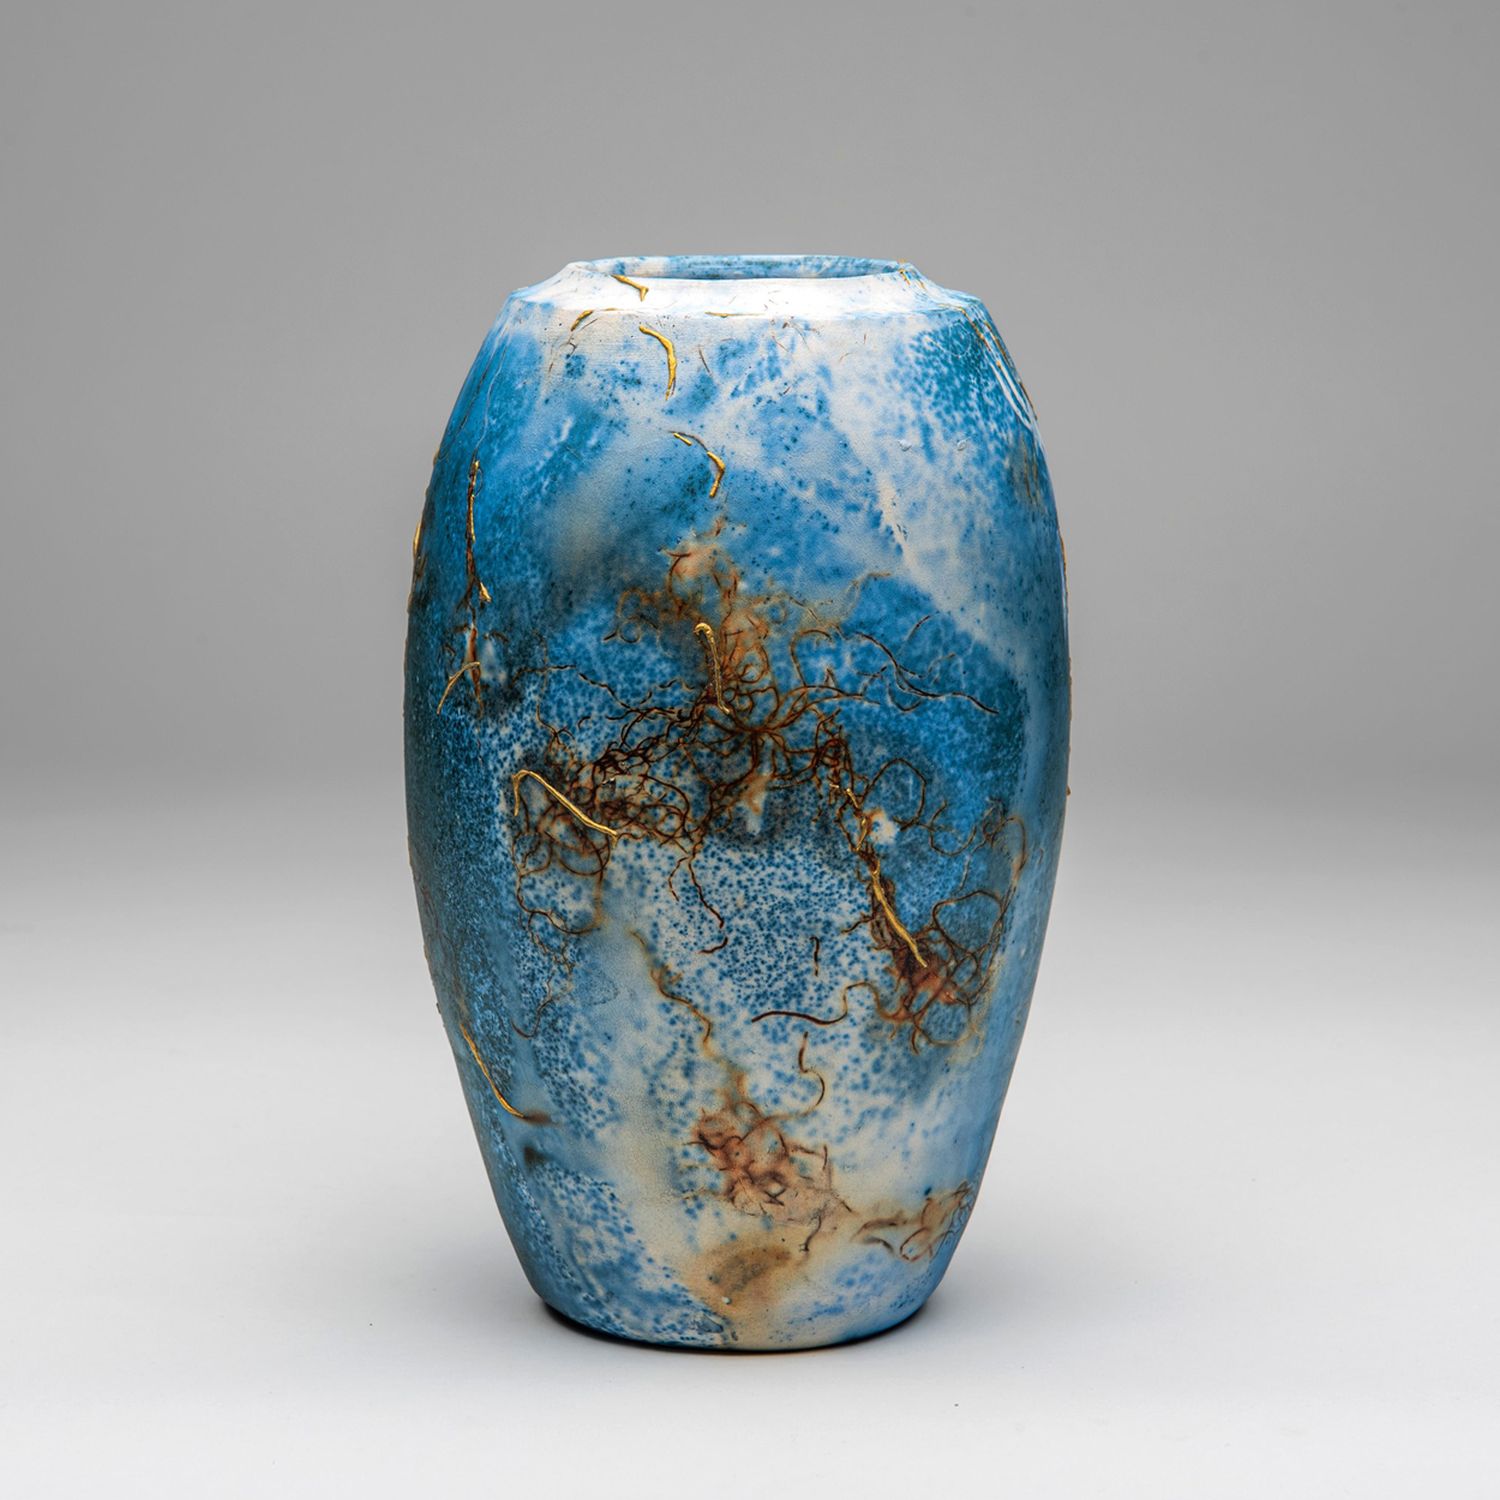 Alison Brannen: Medium Slim Vase Product Image 1 of 1